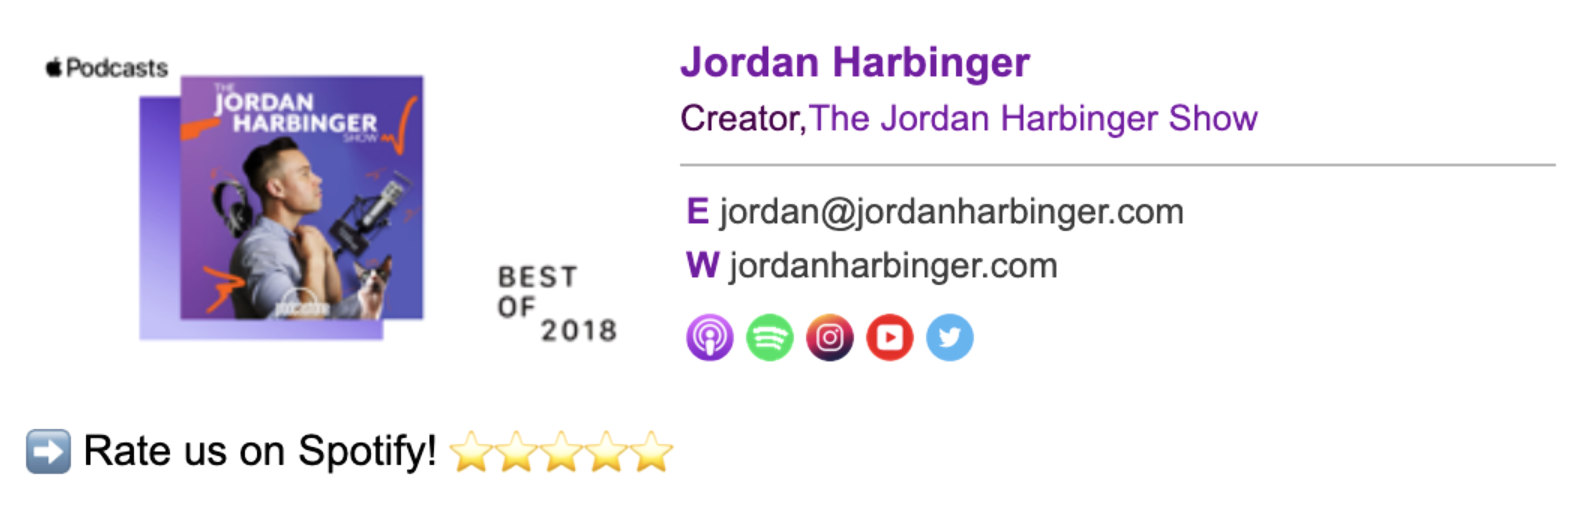 Jordan Harbinger podcast email signature